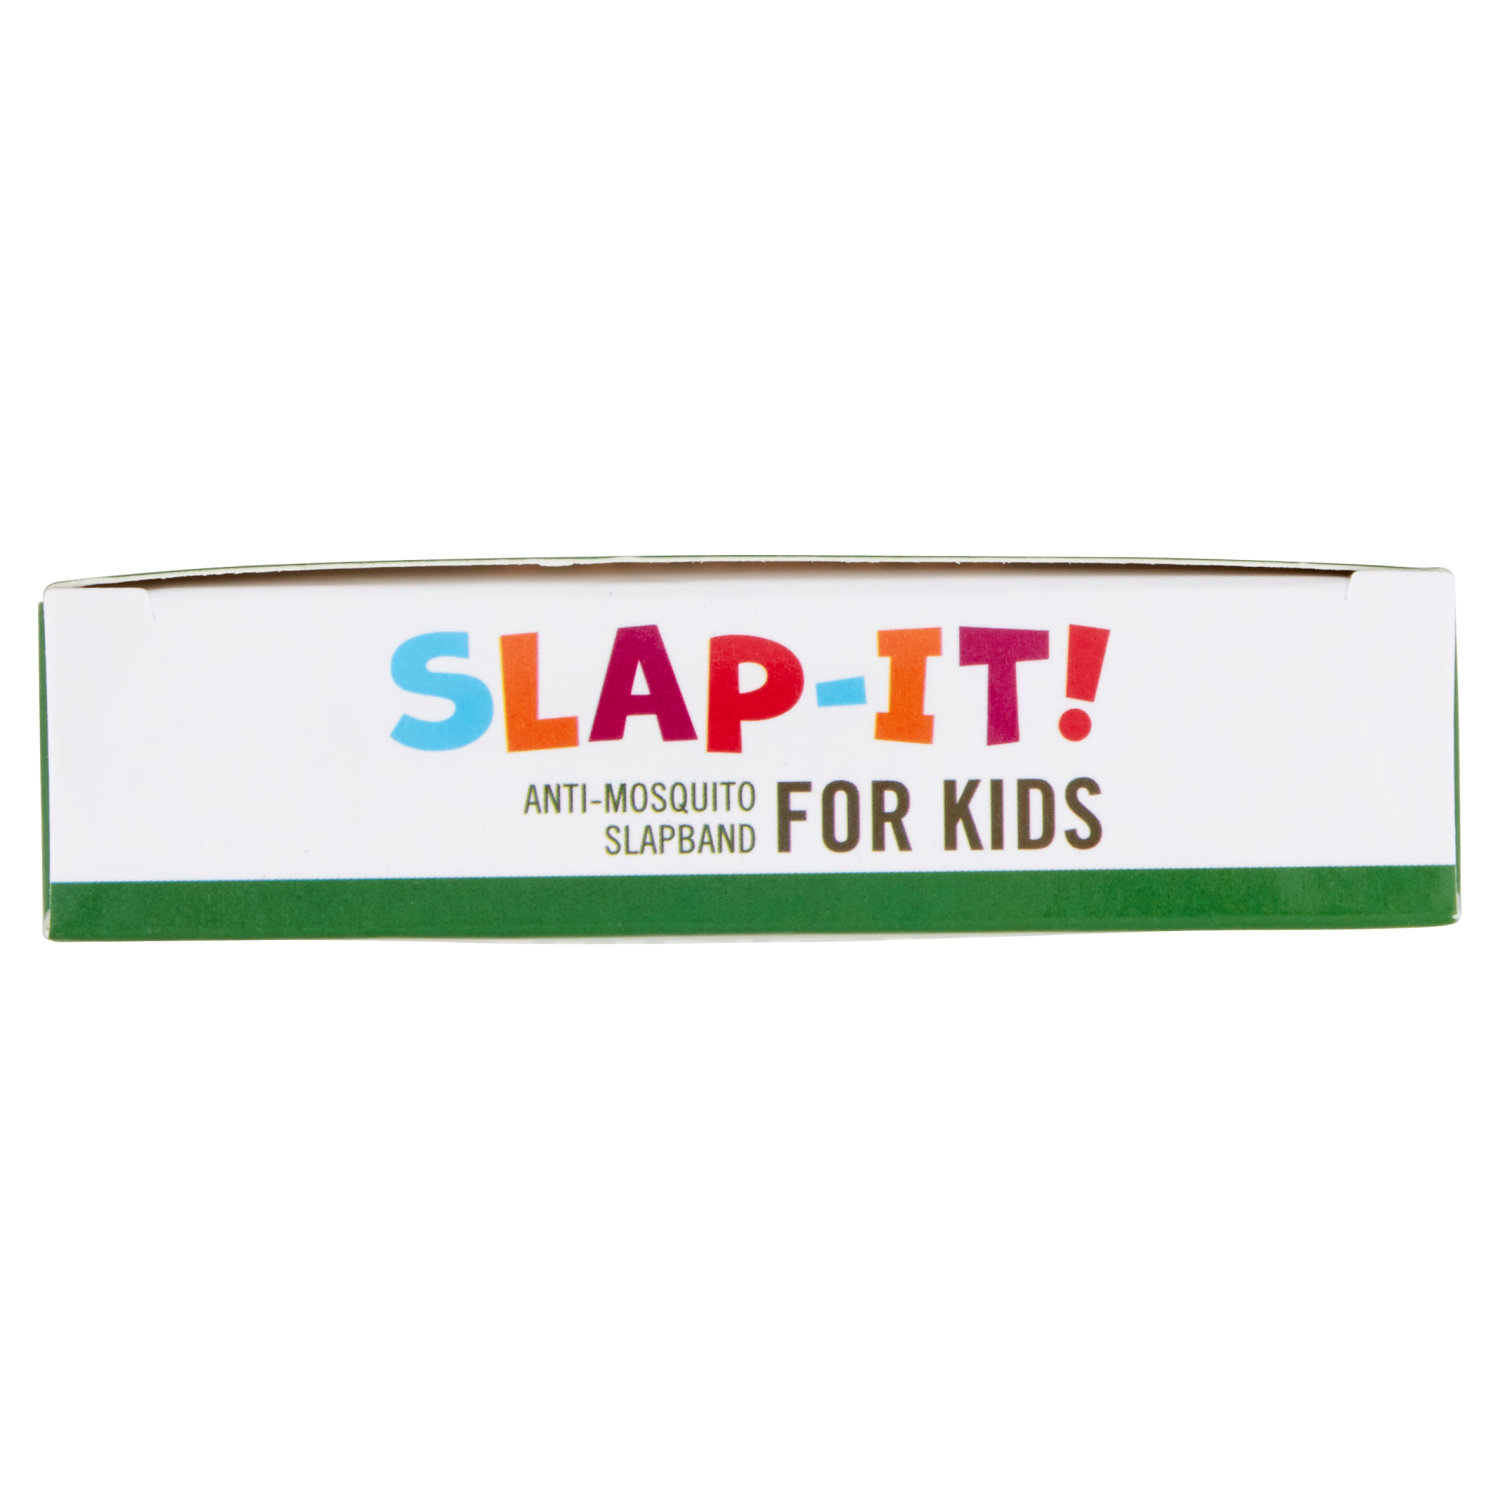 Jungle Formula Slap-It Band for Kids